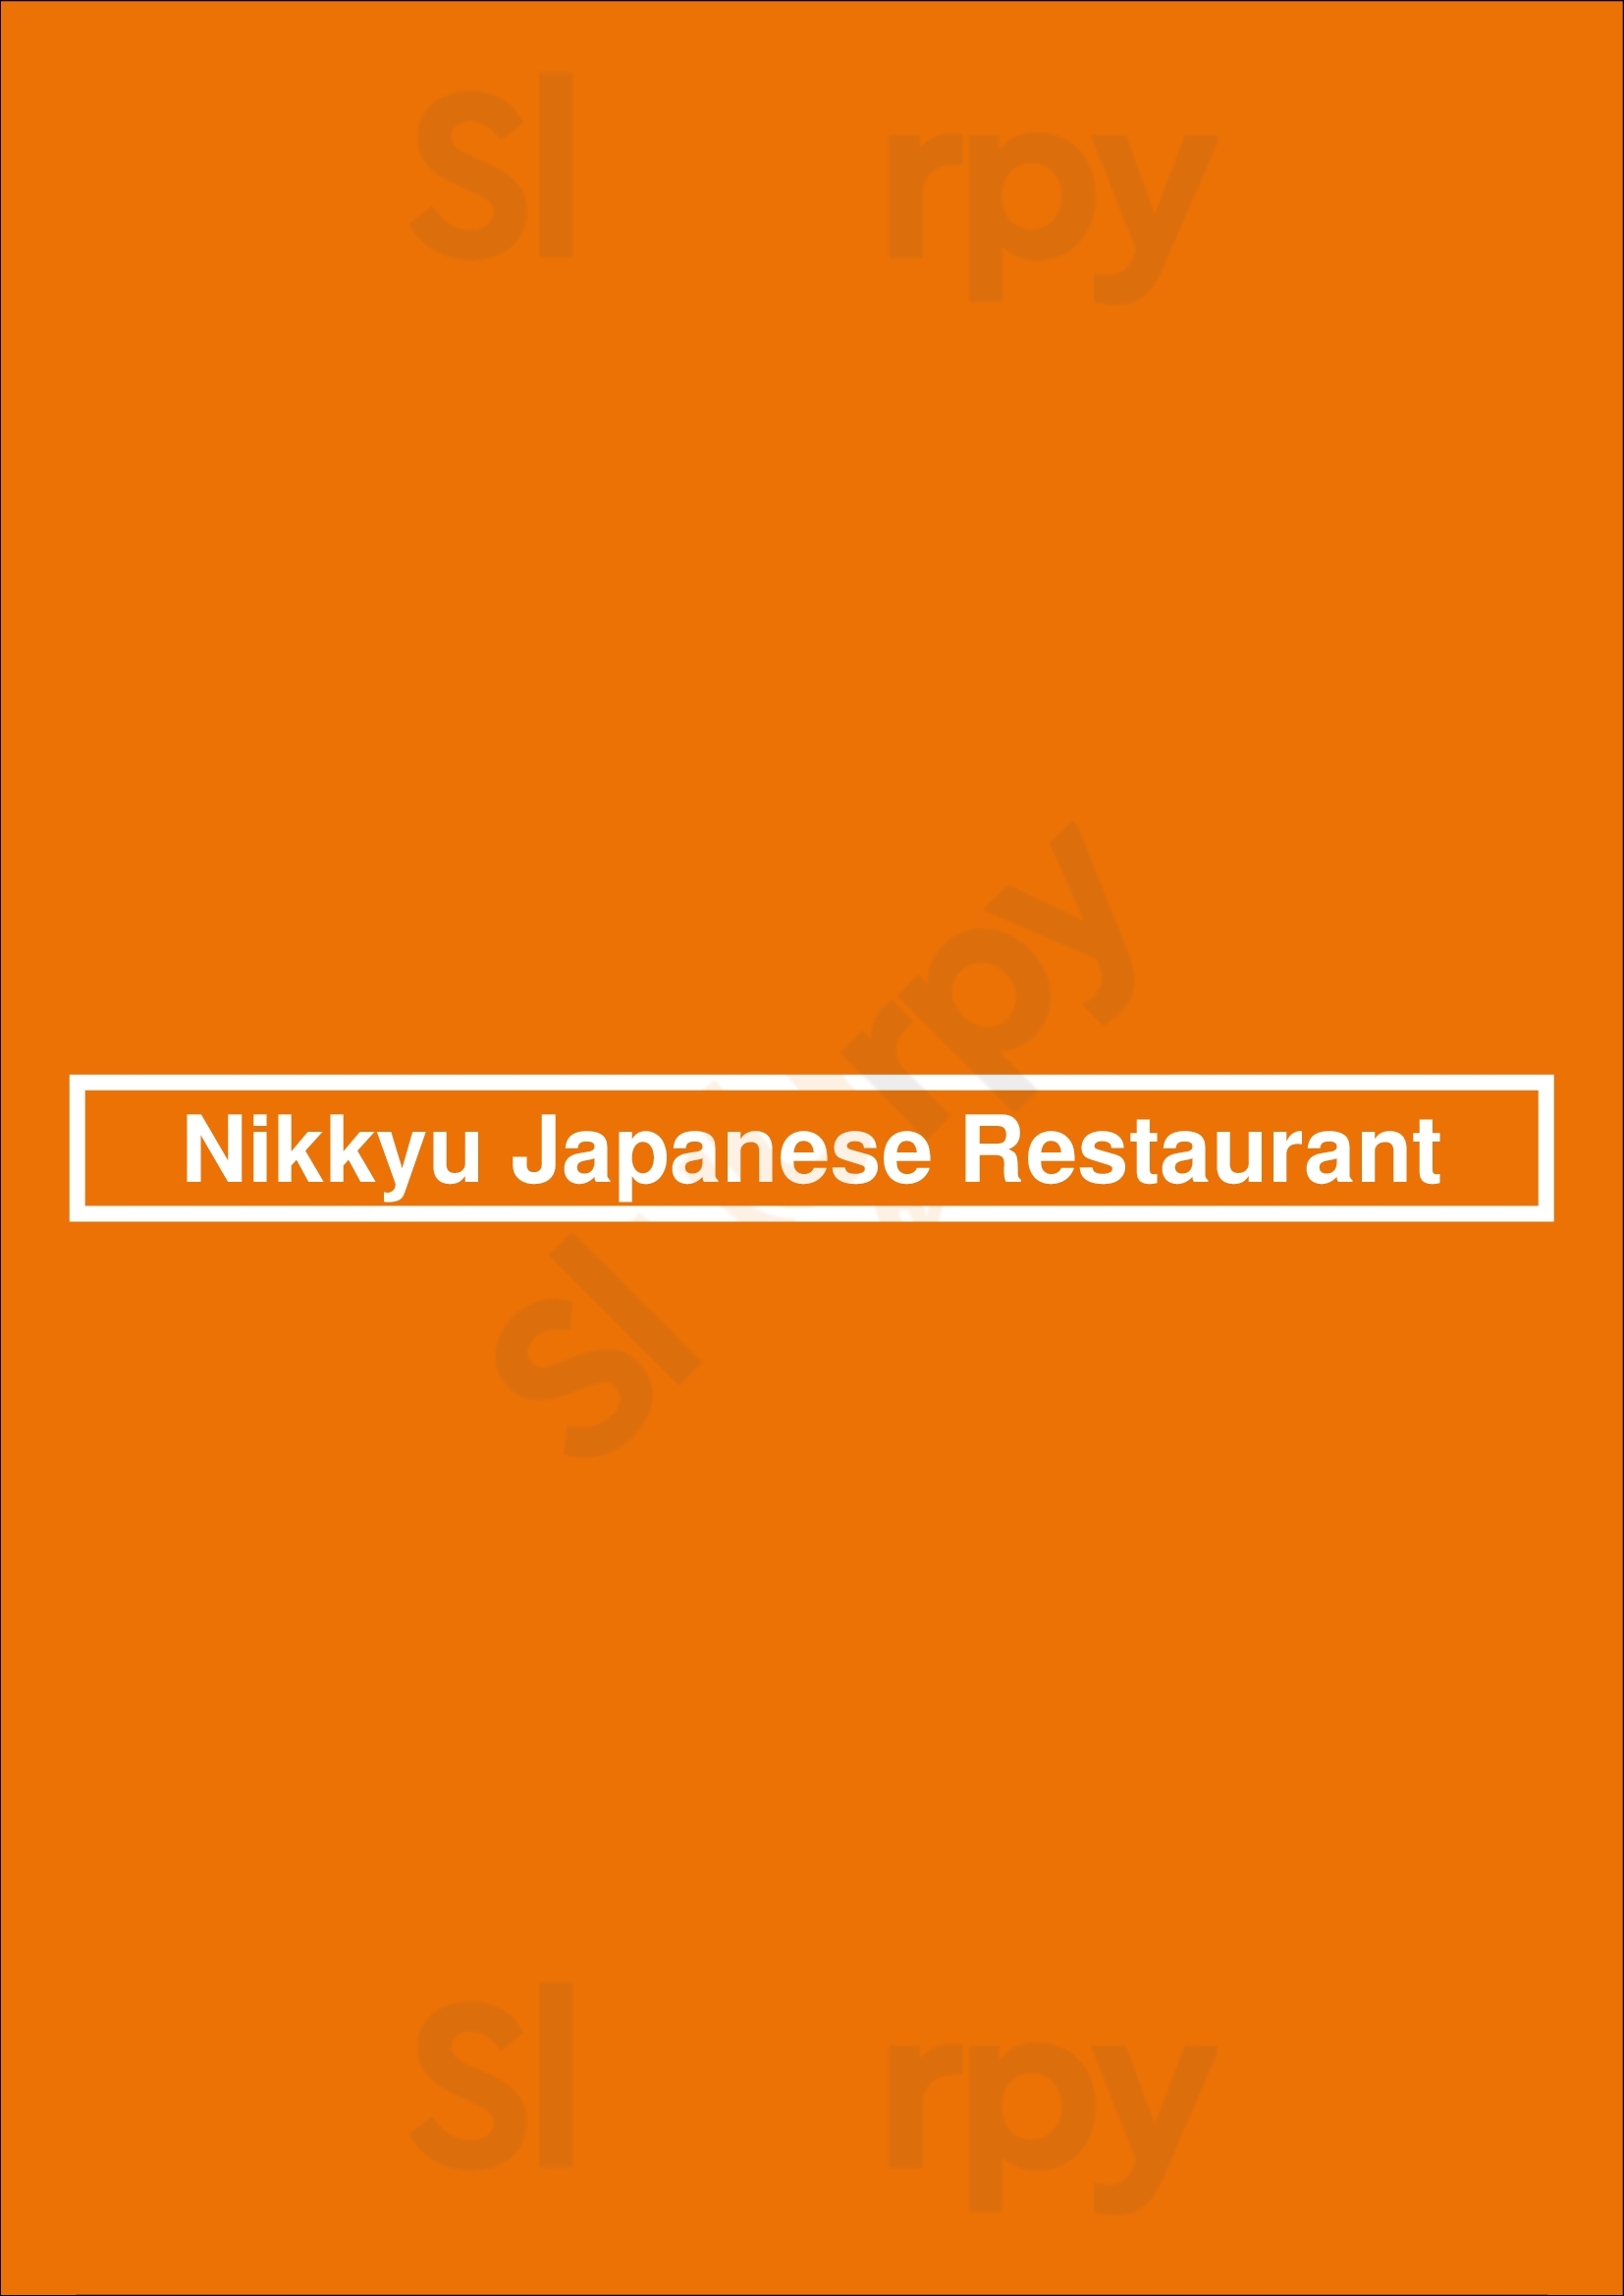 Nikkyu Japanese Restaurant Vancouver Menu - 1